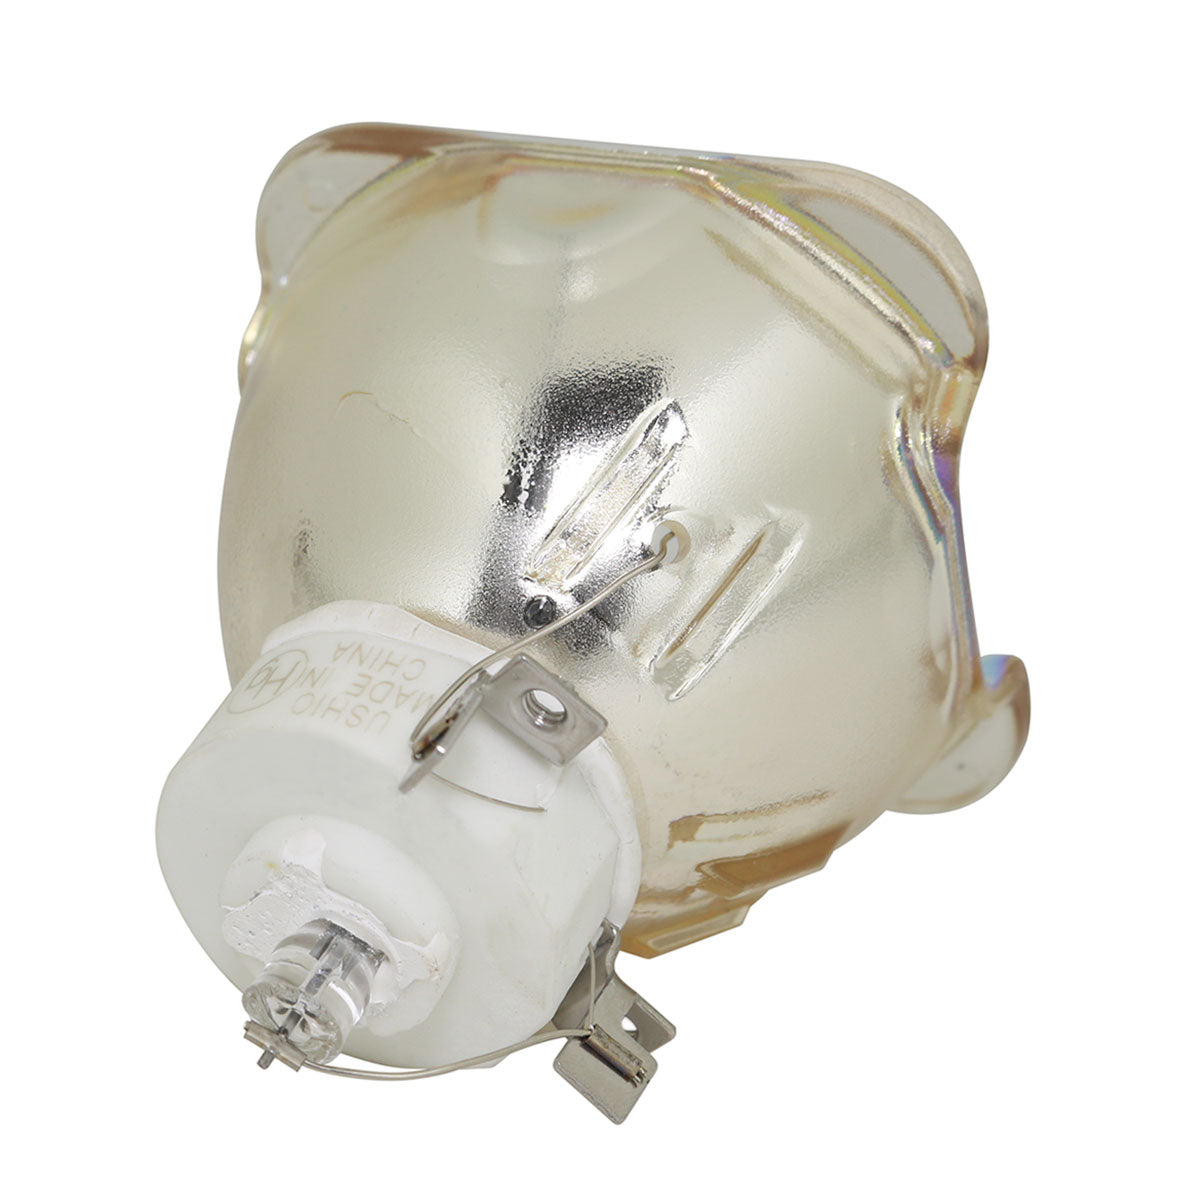 Barco R9801087 Ushio Projector Bare Lamp